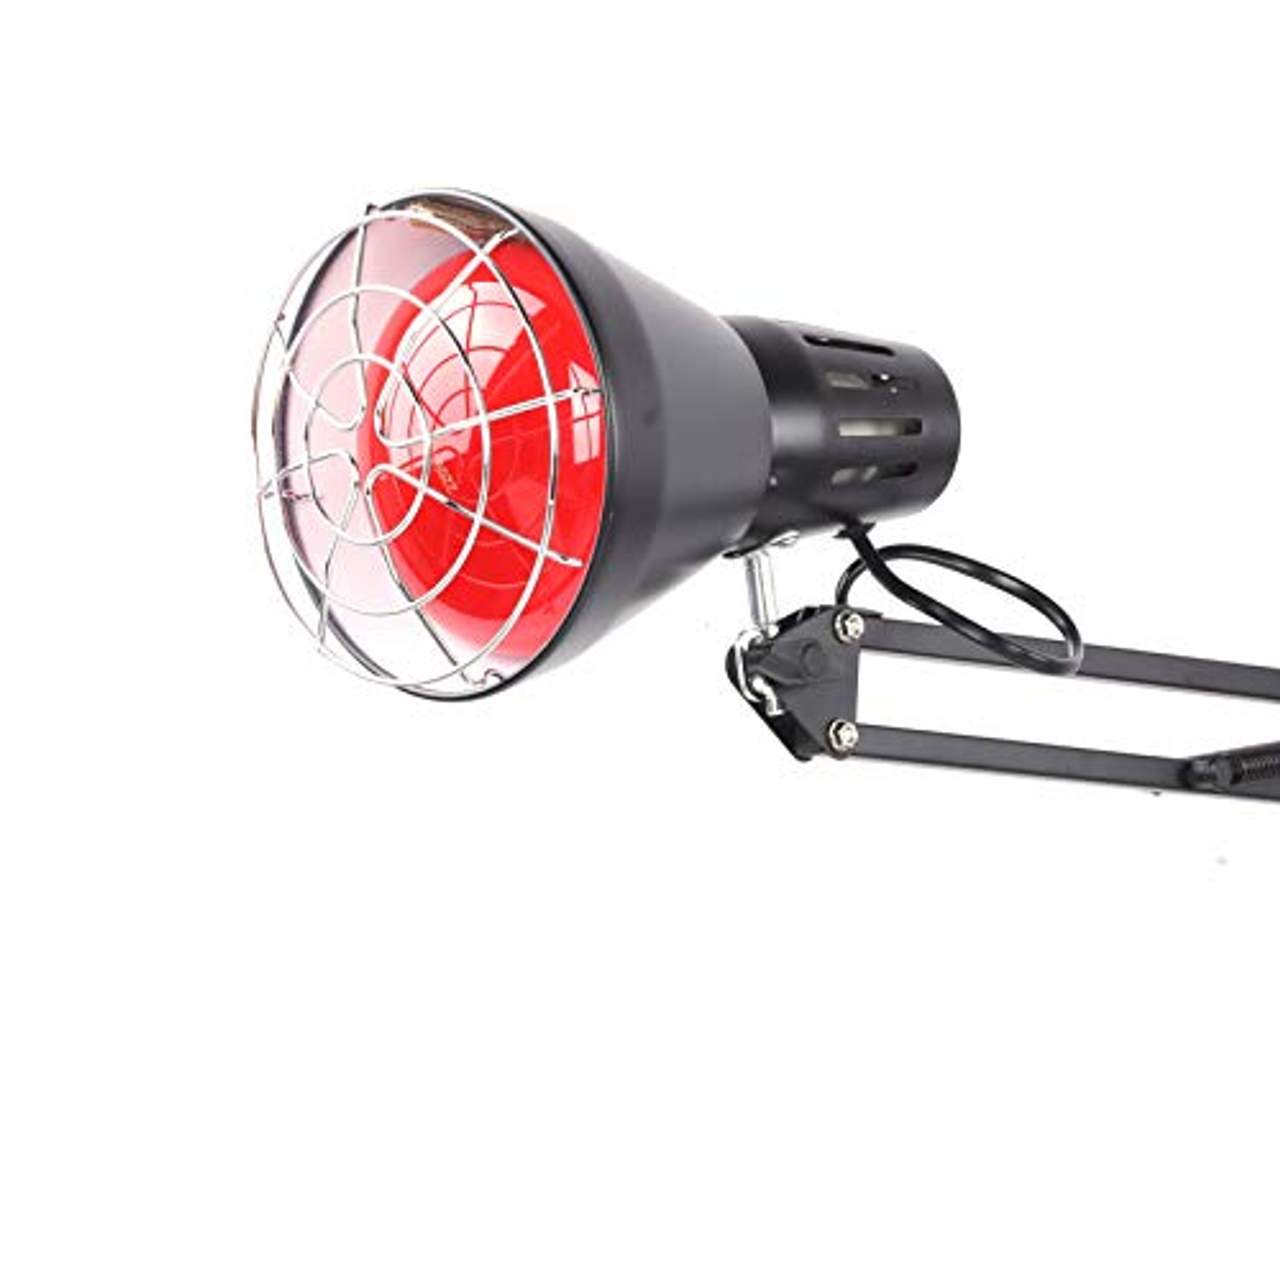 Brrnoo 150W Rotlichtlampe Wärmelampe